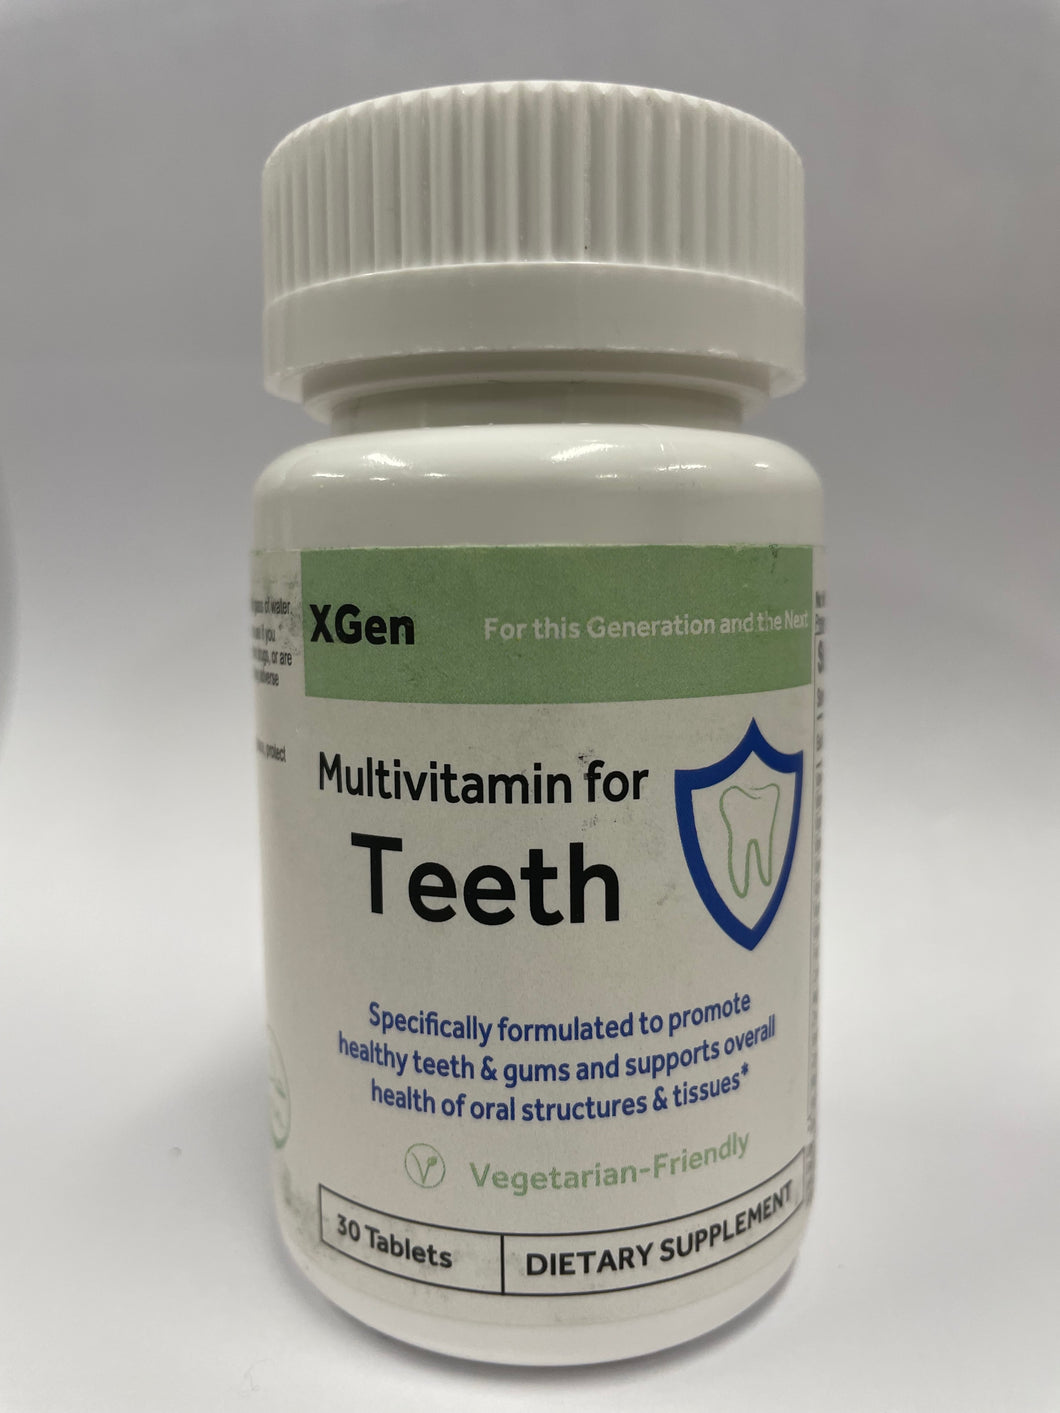 Multivitamin for Teeth